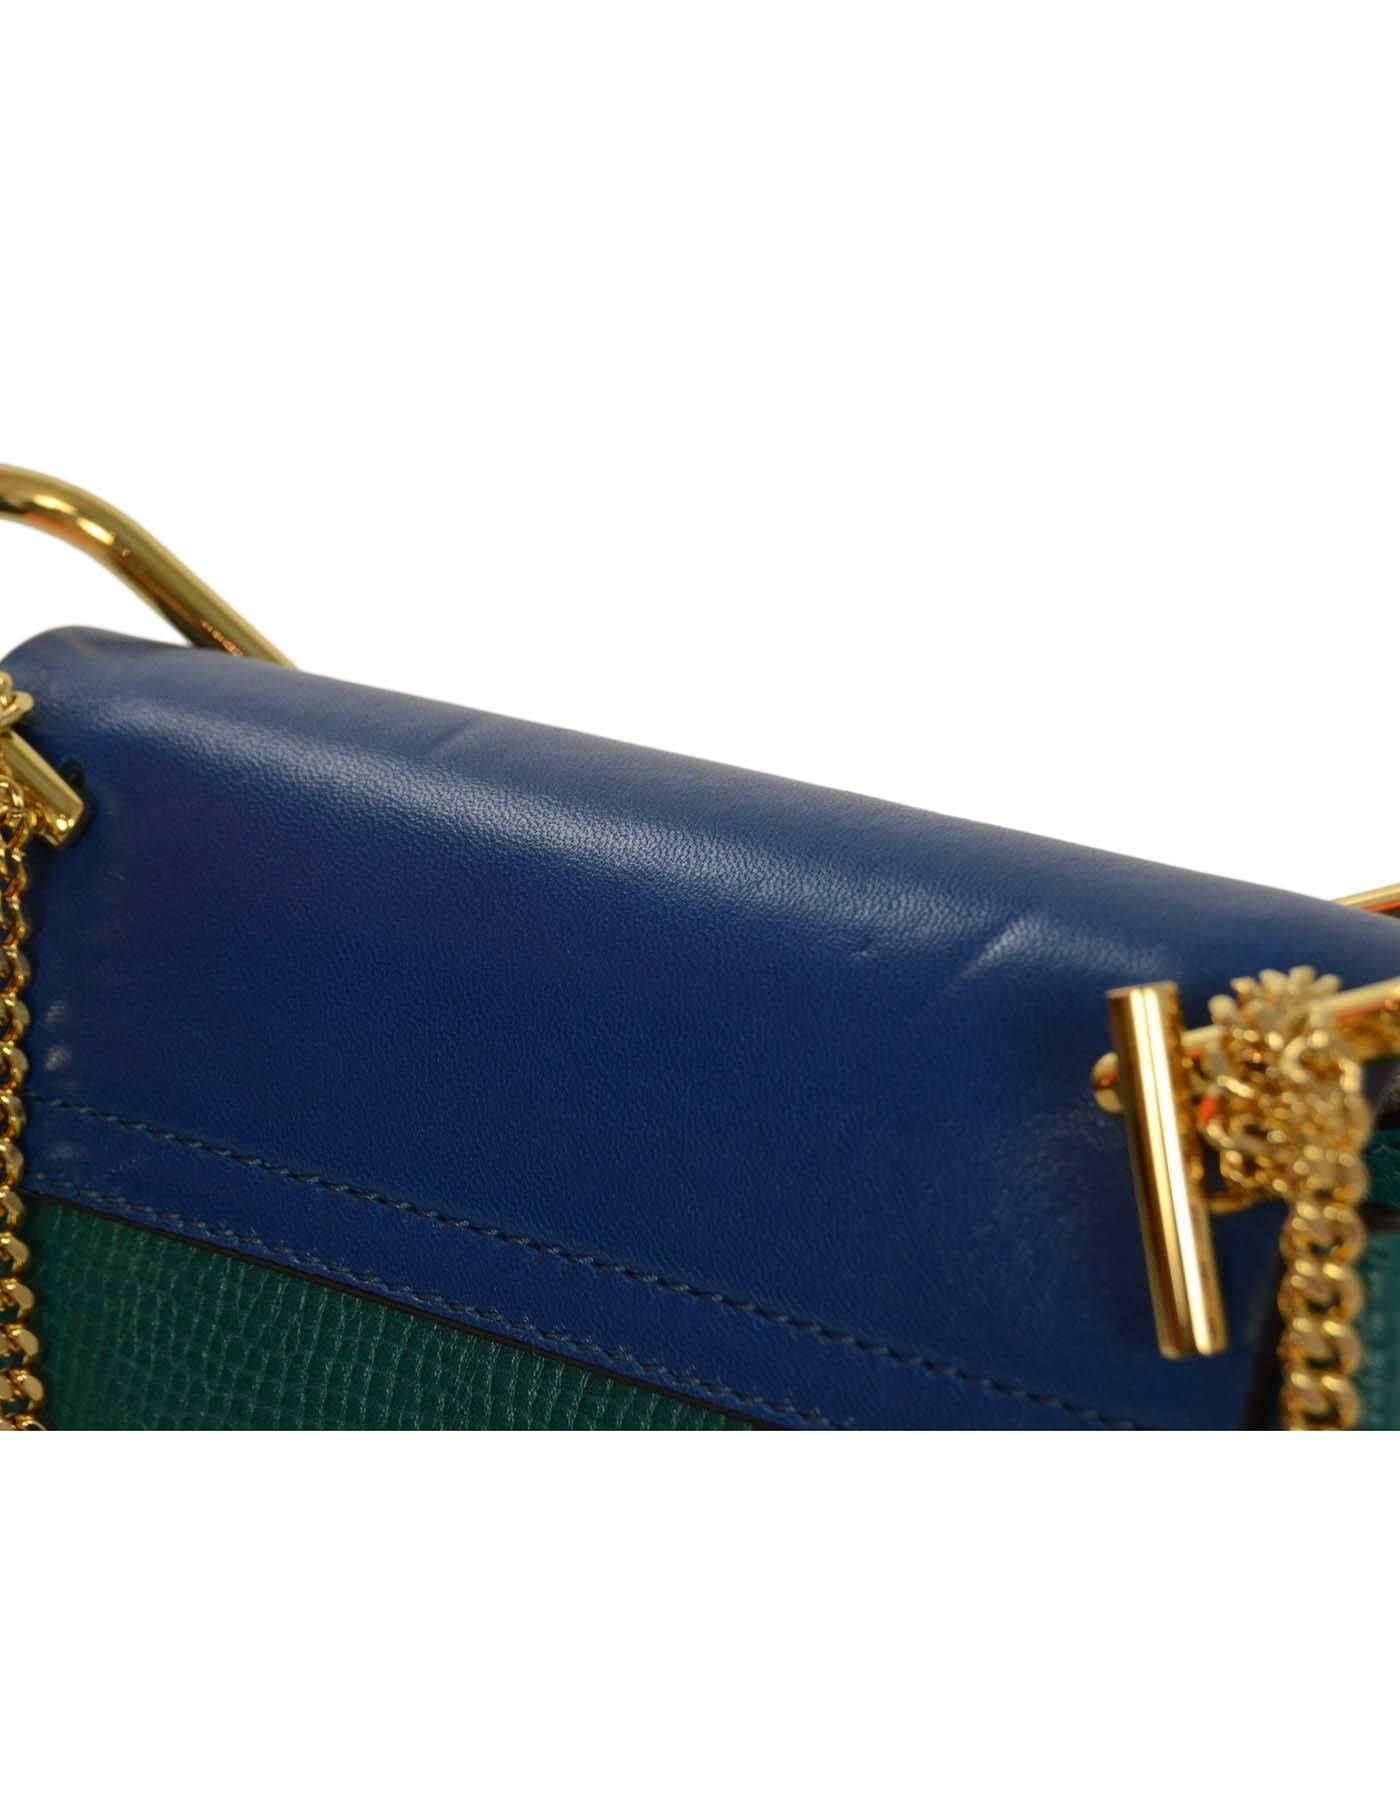 Chloe Blue and Green Bicolor Drew Small Crossbody Bag GHW rt. $1, 950 4